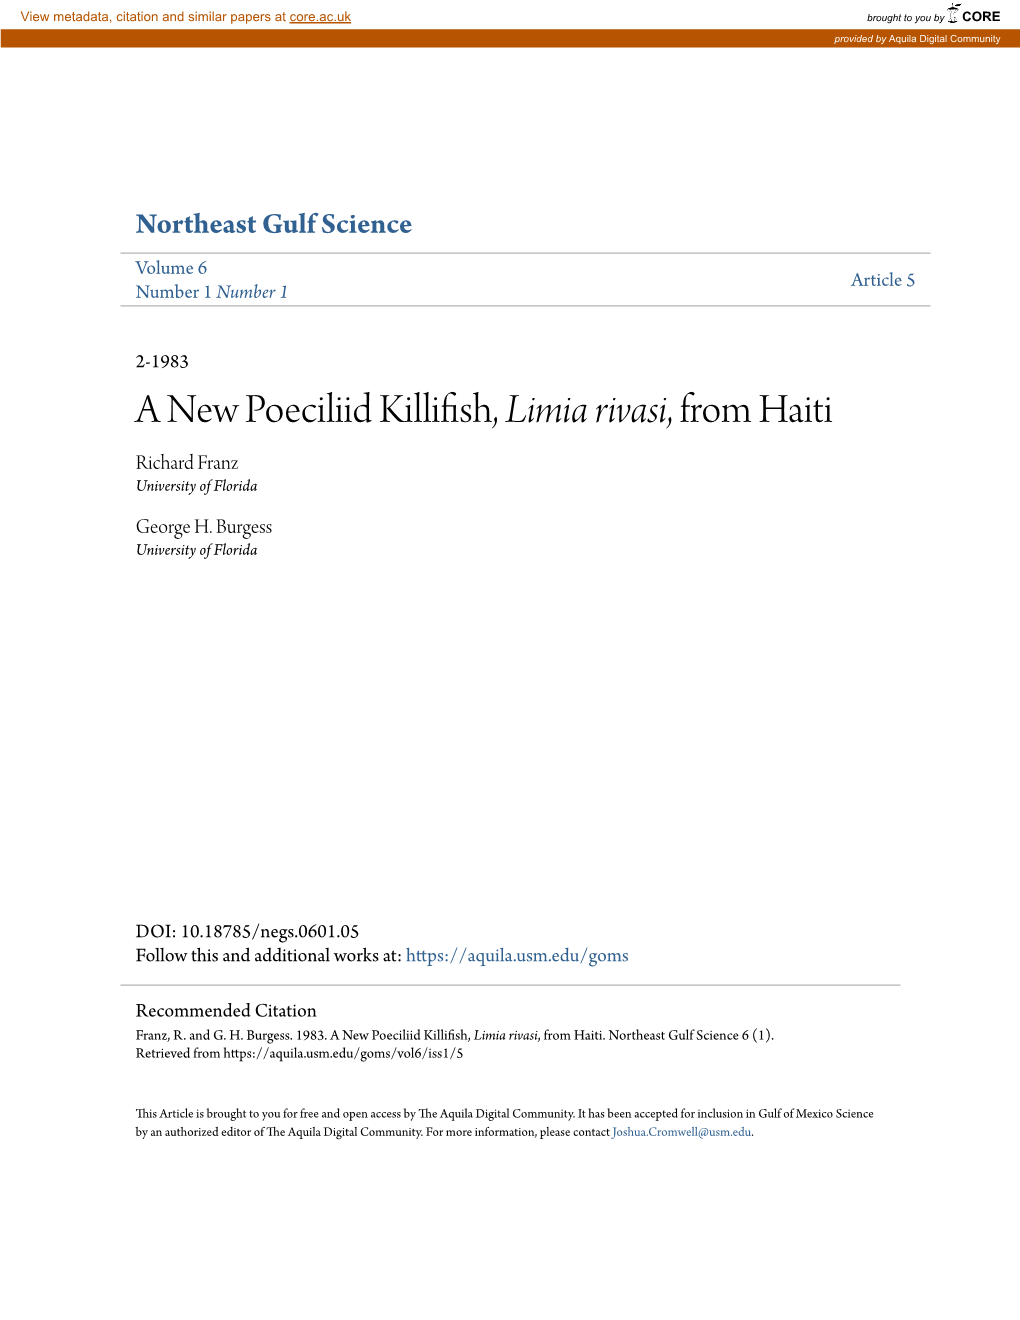 A New Poeciliid Killifish, Limia Rivasi, from Haiti Richard Franz University of Florida